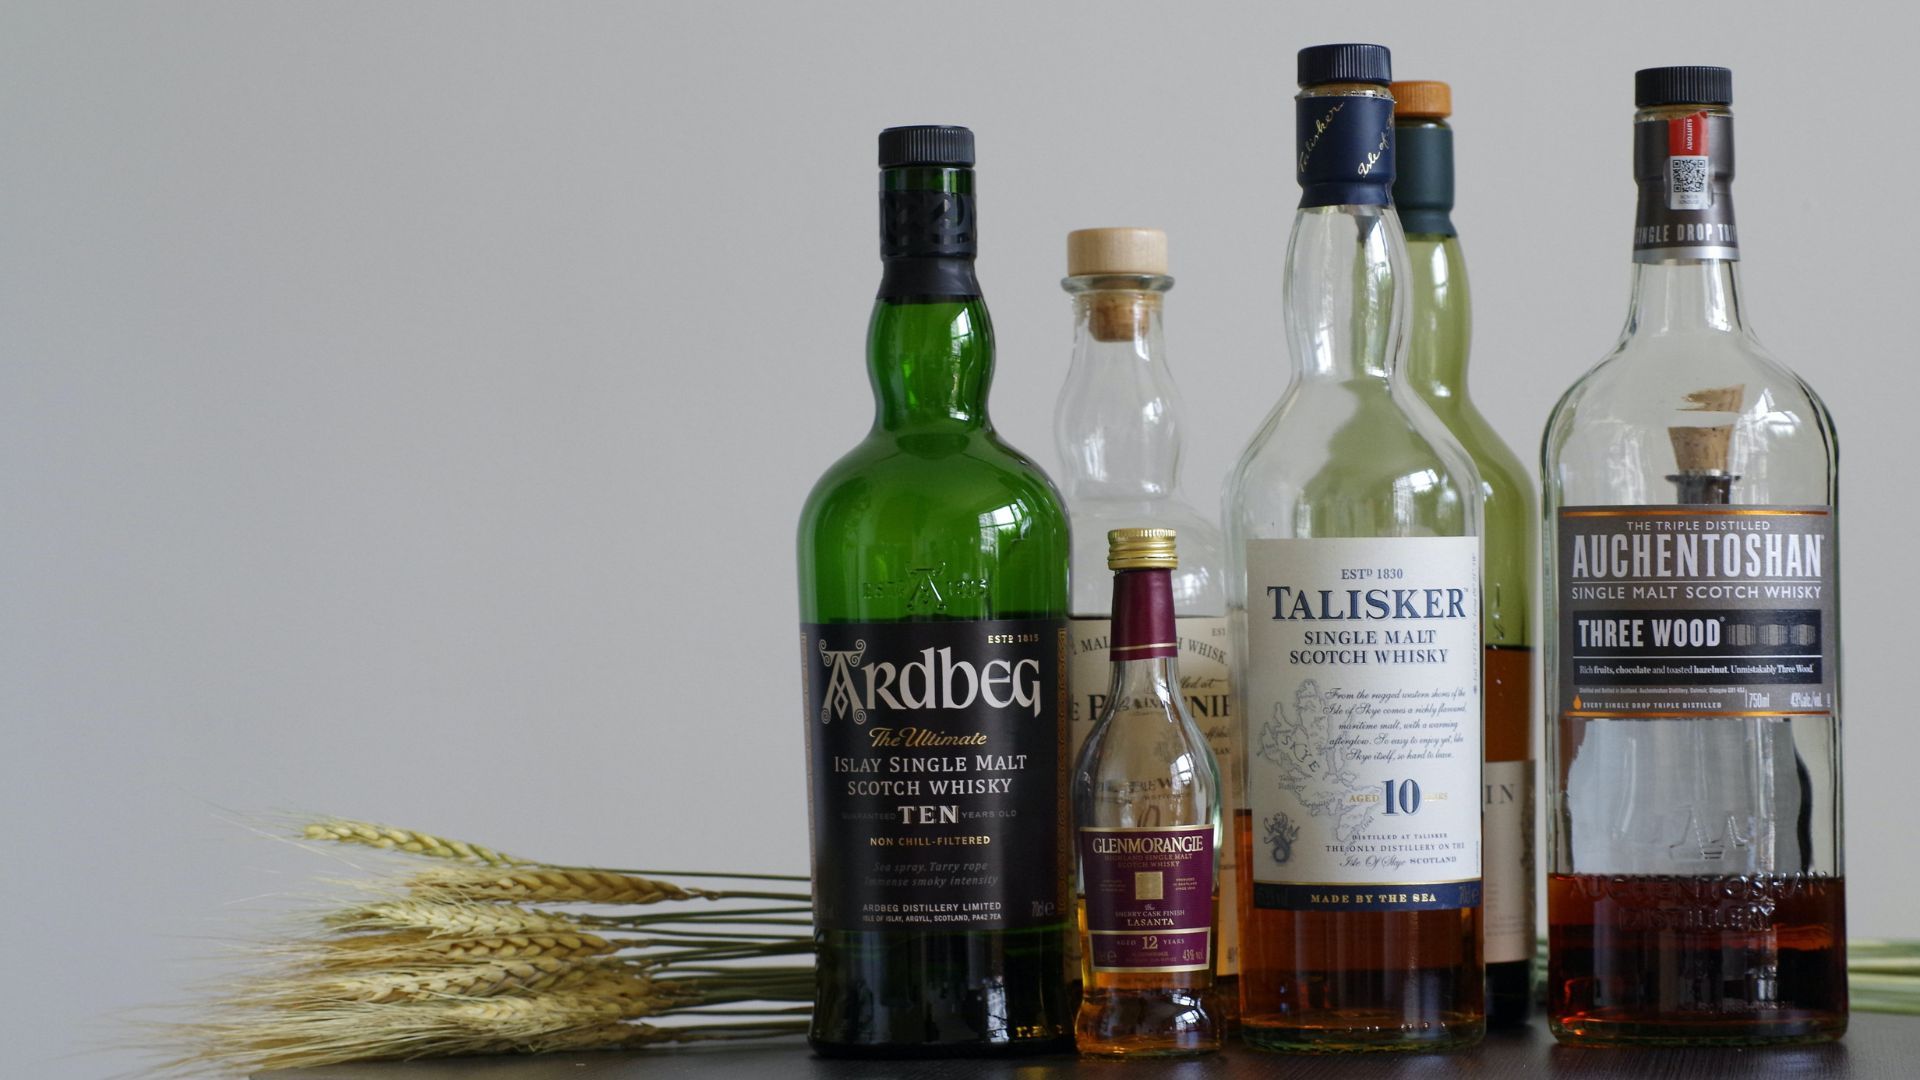 Whisky label: Other details